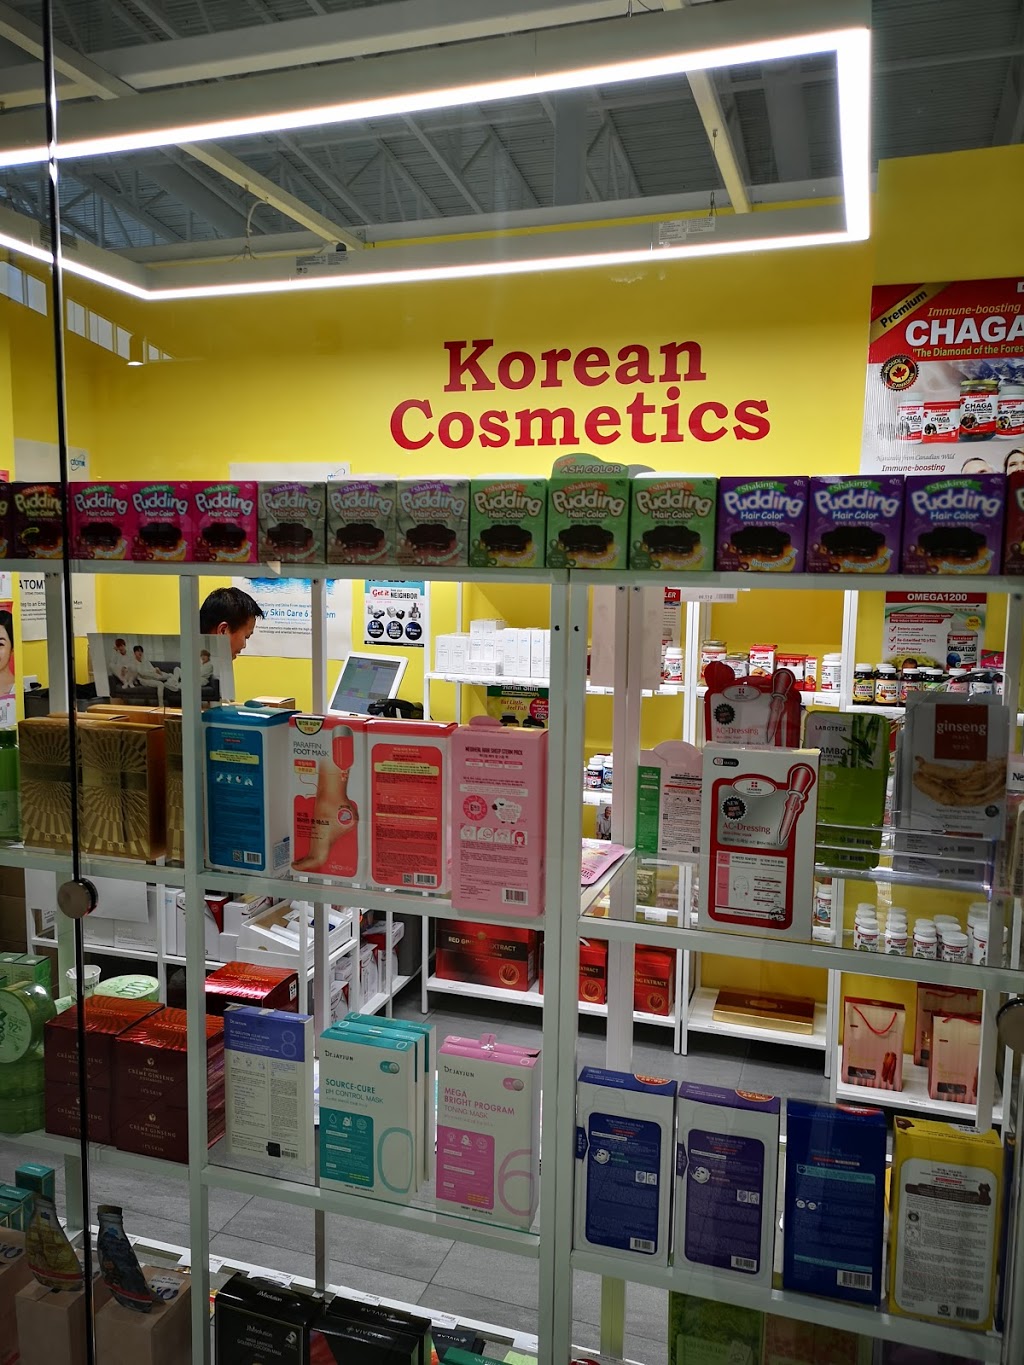 Korean Cosmetics/Koreana B&H | Newhorizonmall, 260300 Writing Creek Cres, Balzac, AB T4A 0X8, Canada